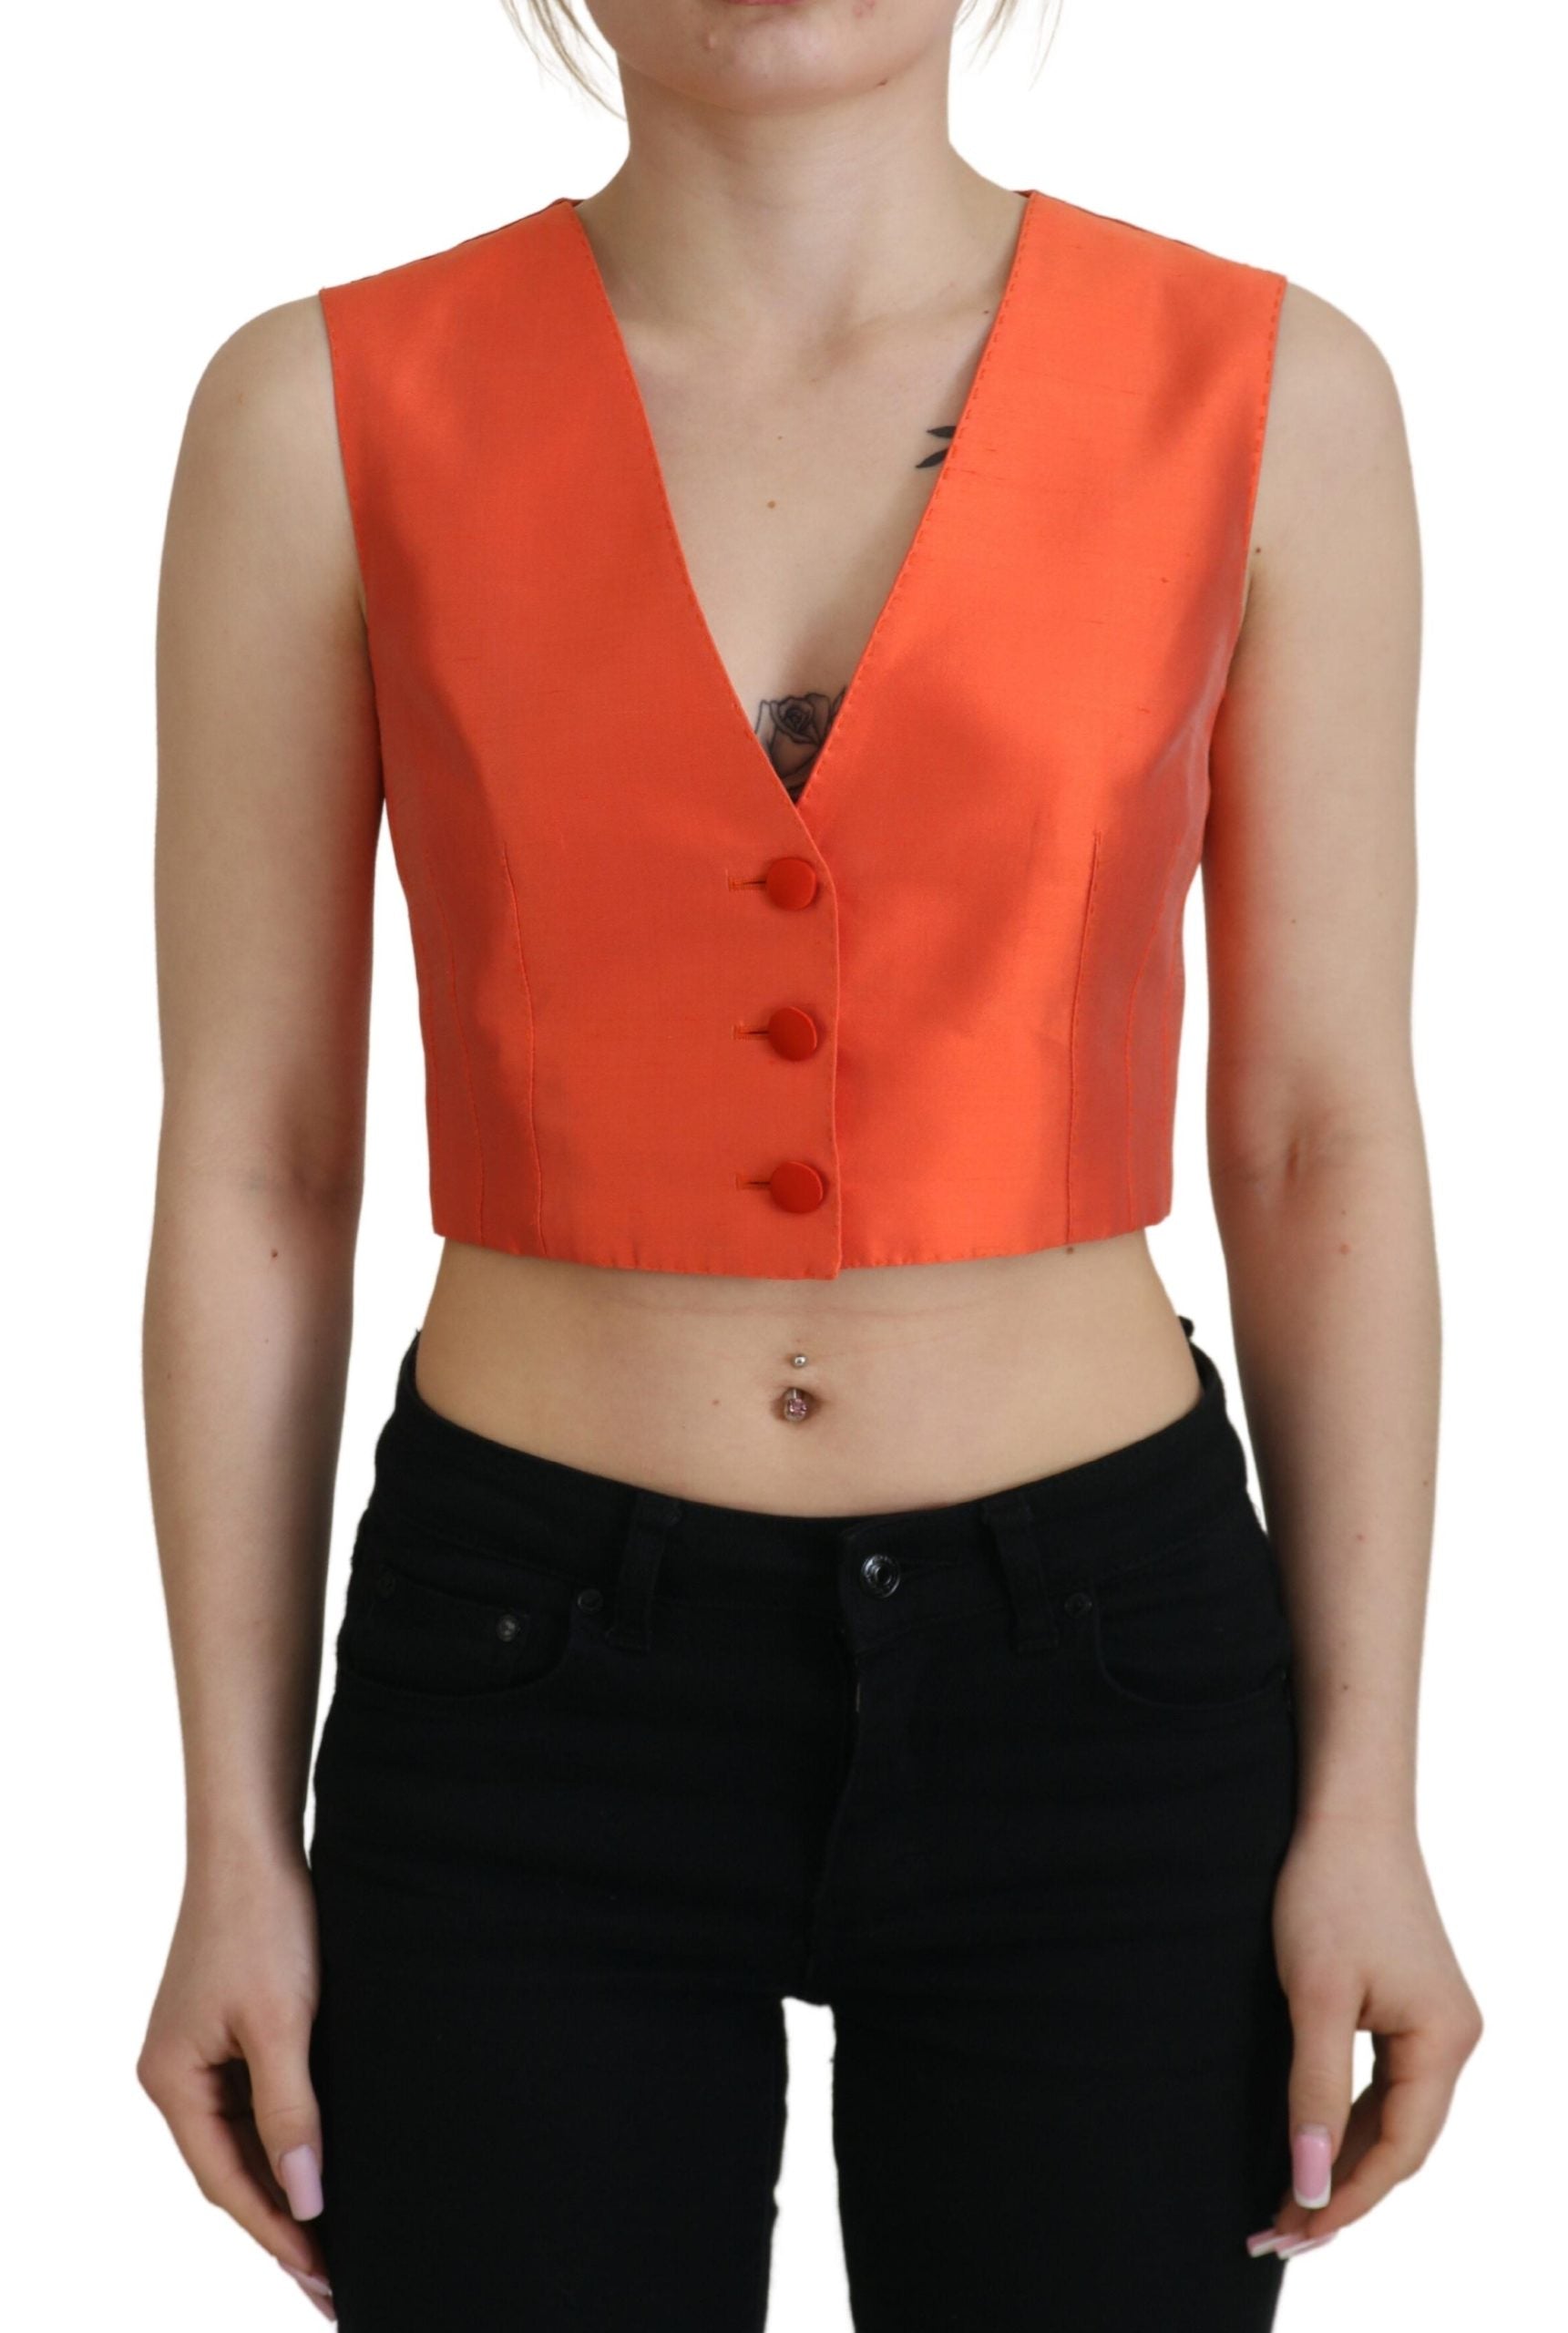 Dolce & Gabbana Orange Top Vest